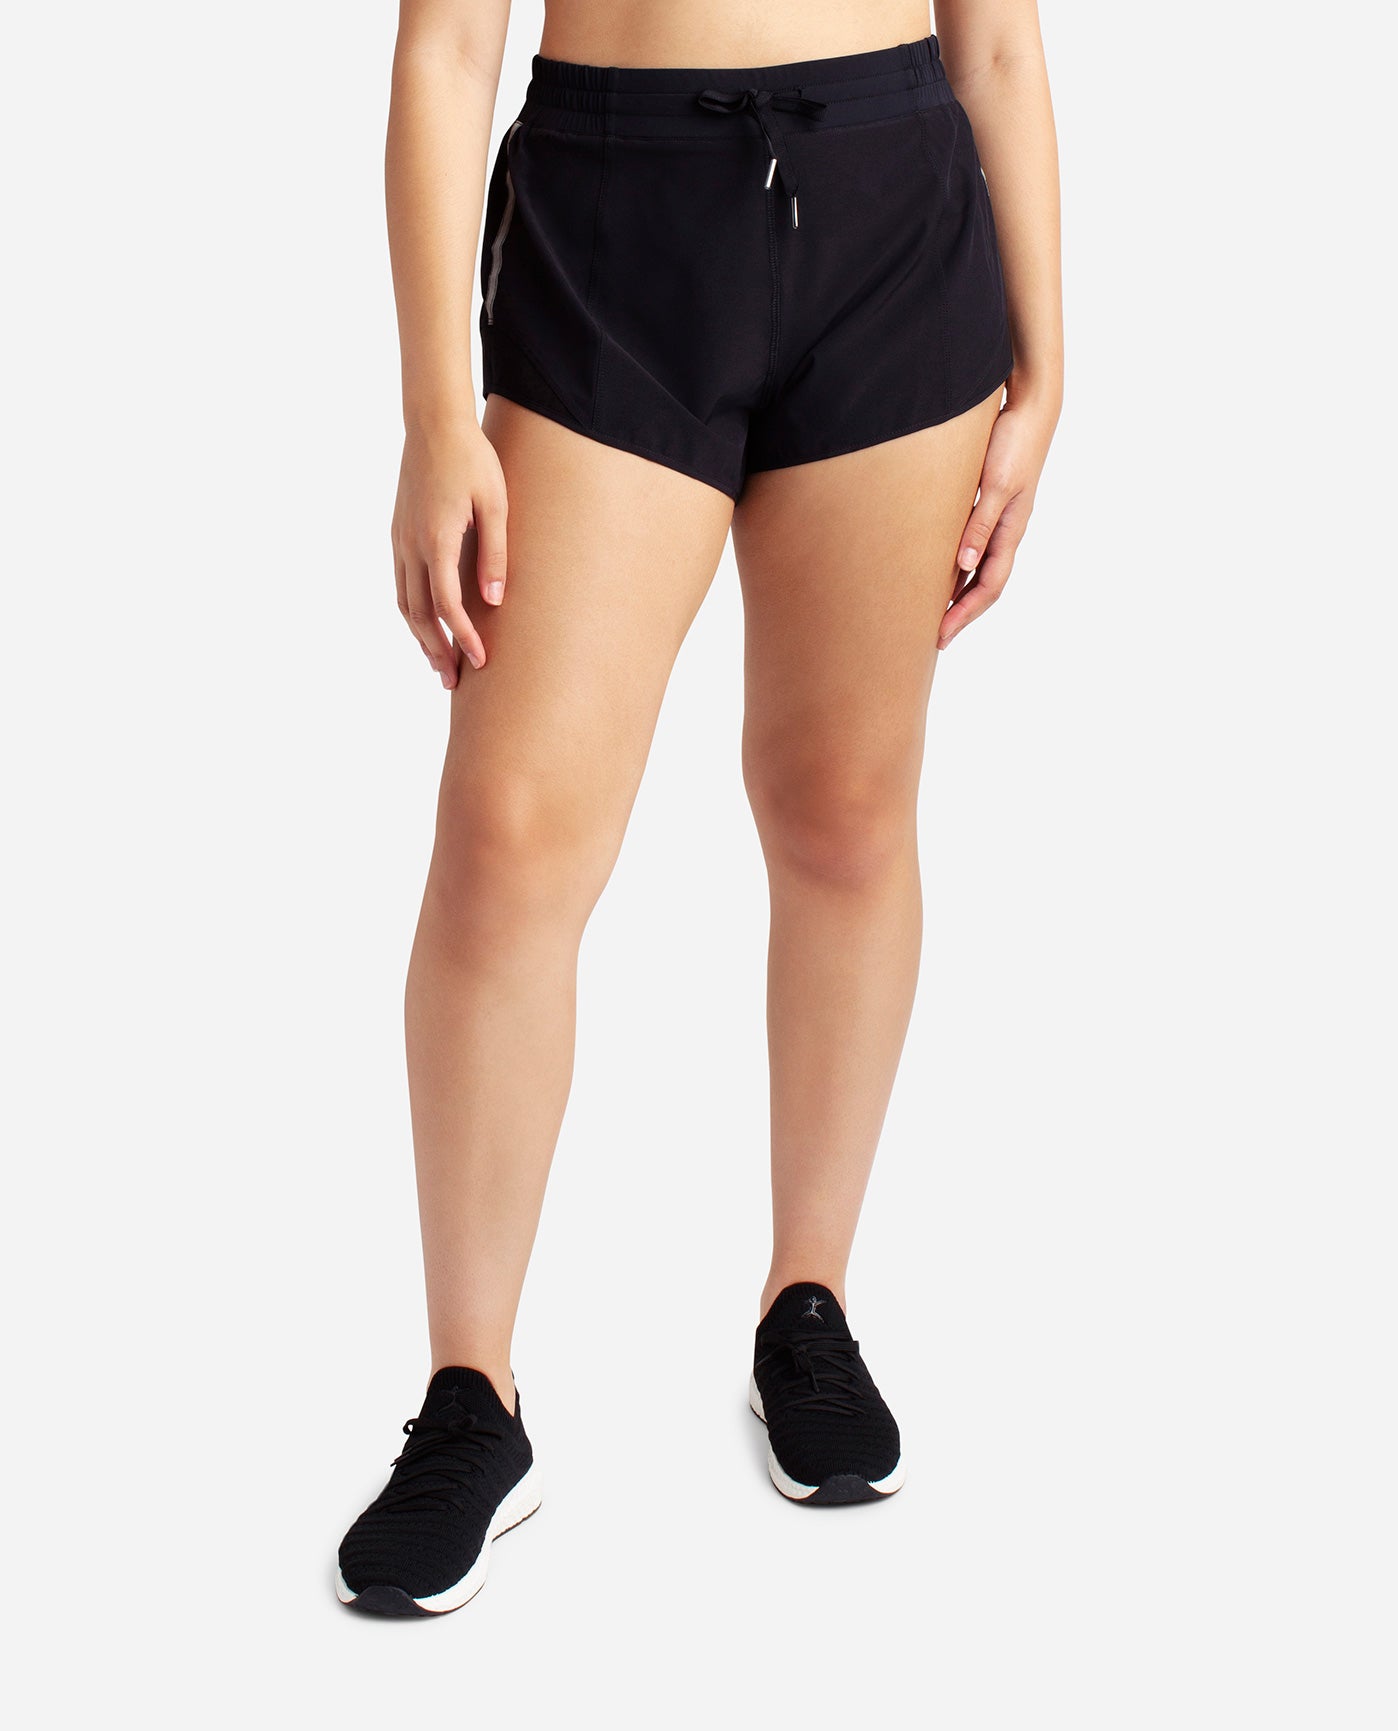 DANSKIN NOW WOMEN'S Active Wear 2fer Knit Running Shorts Black. Size M  $14.25 - PicClick